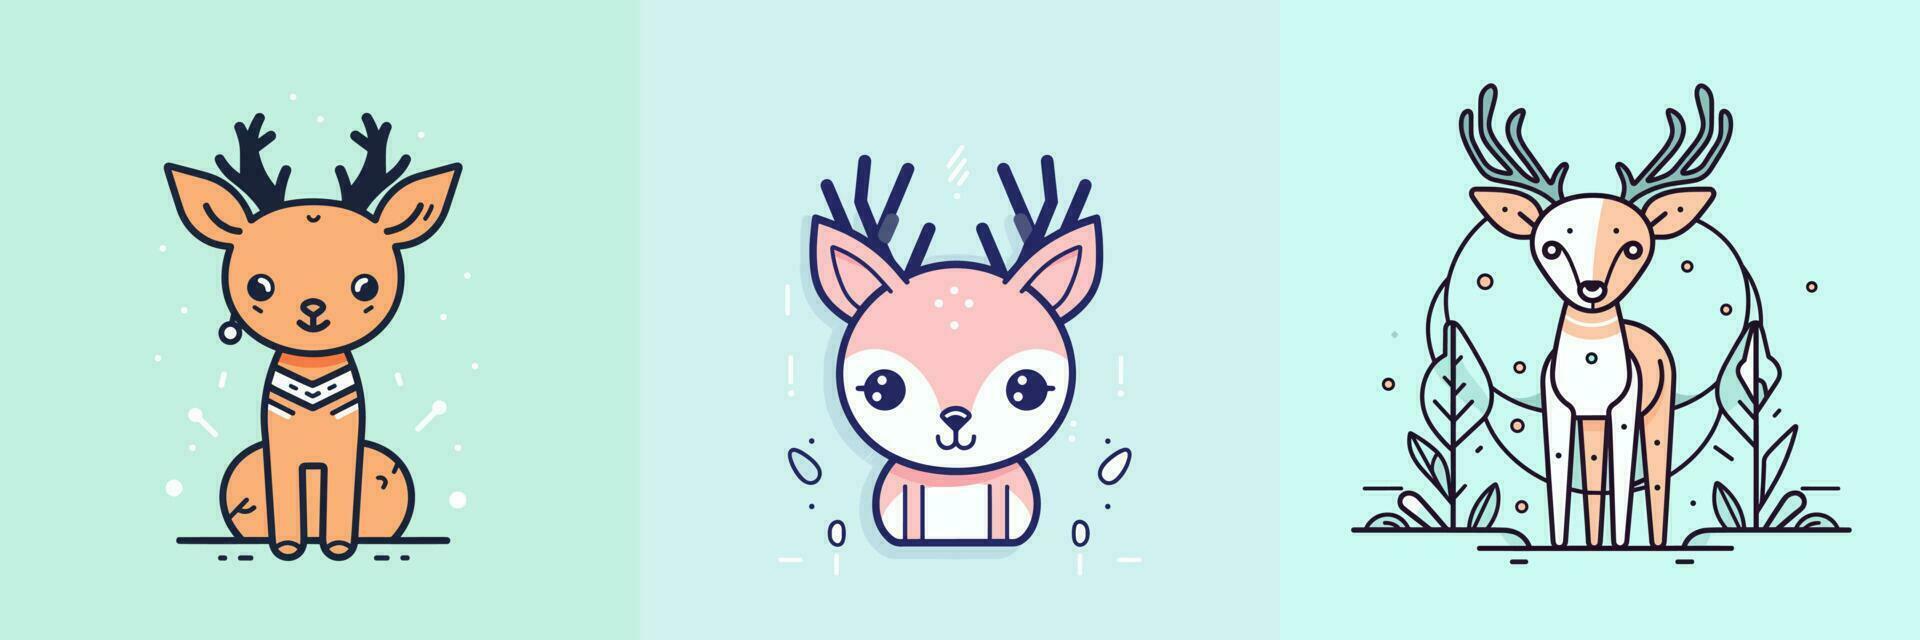 Cute Deer set collection kawaii cartoon illustration vector